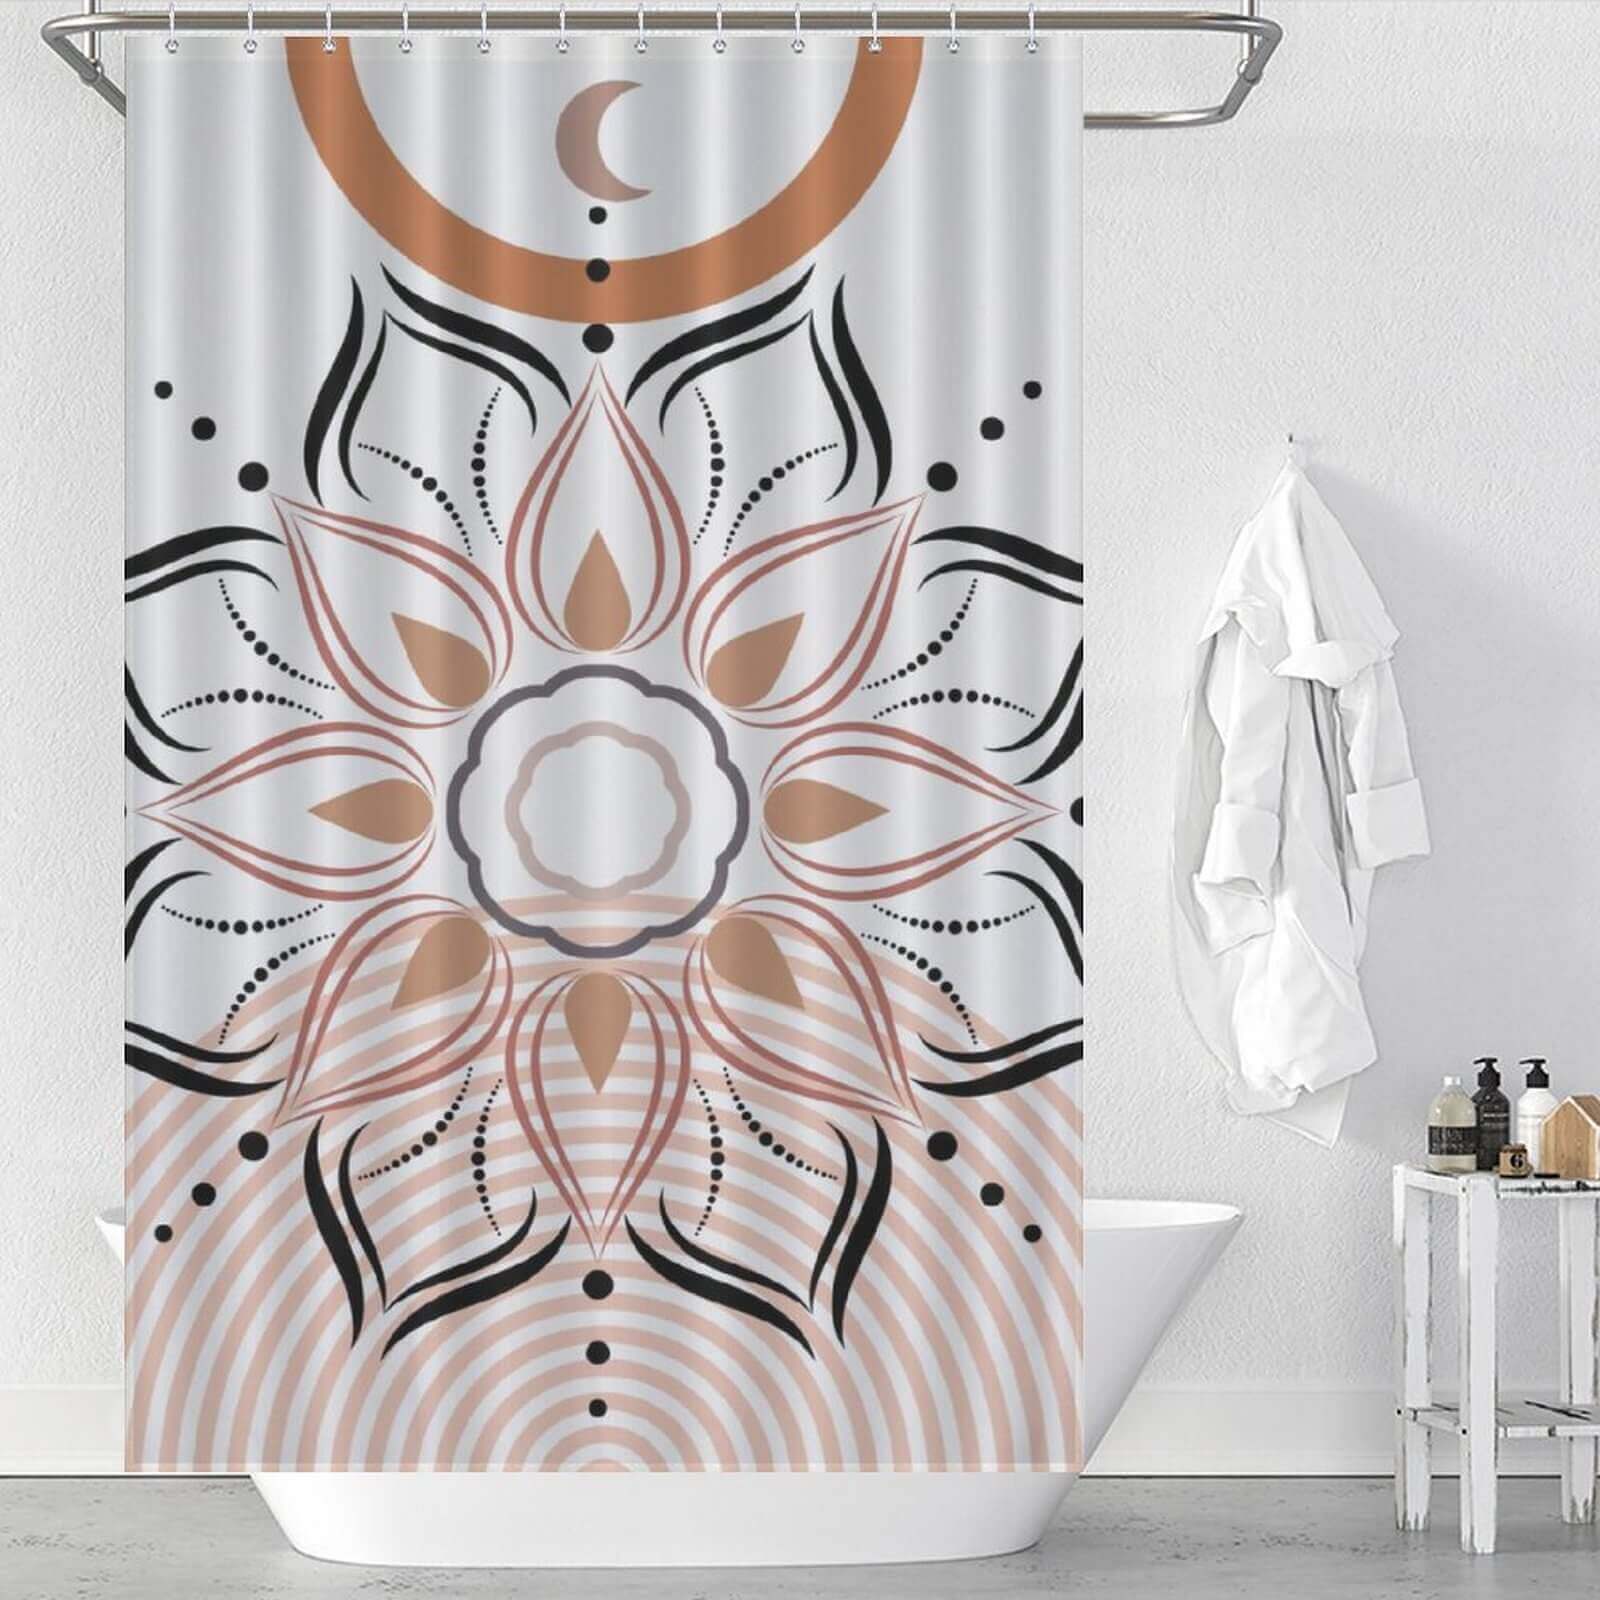 A Cotton Cat shower curtain with a Boho Mandala design, perfect for bathroom decor.